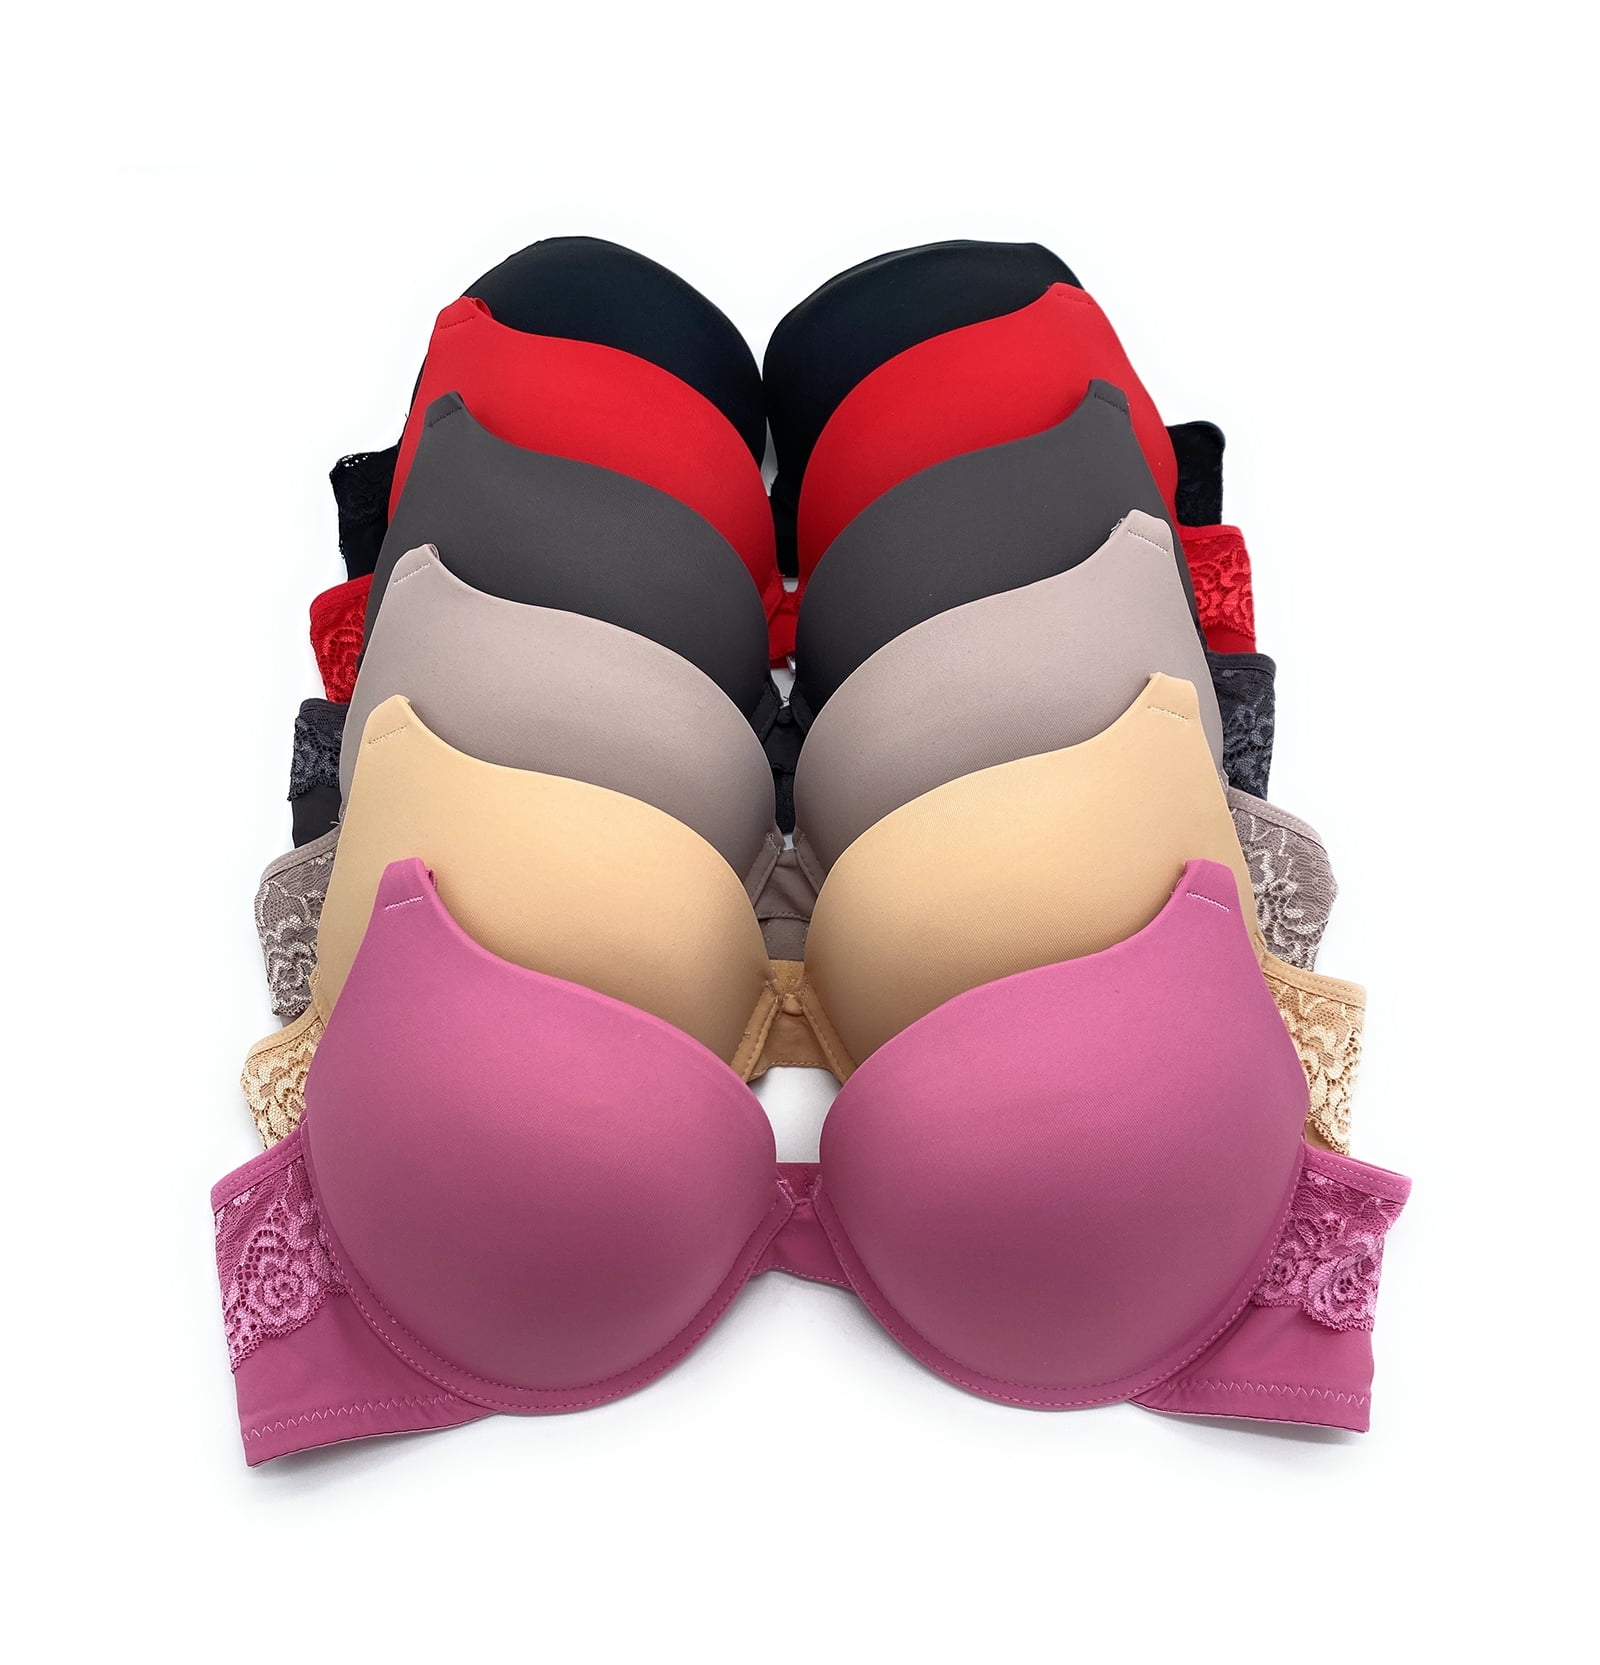 50% Off Select Packs!, The push-up bra for men. 👕